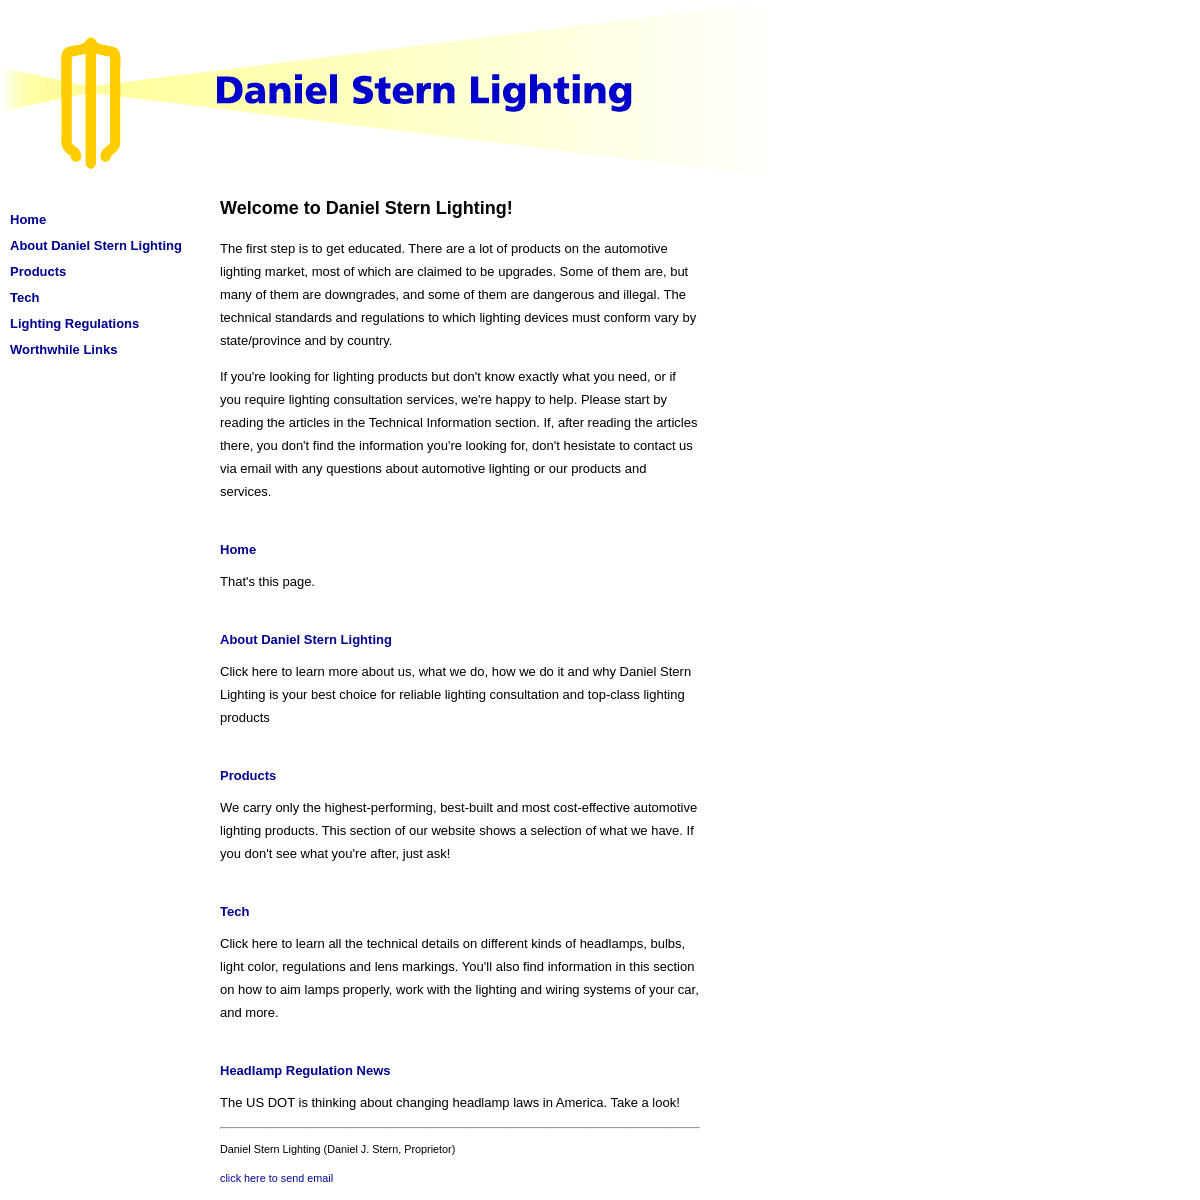 A complete backup of https://danielsternlighting.com